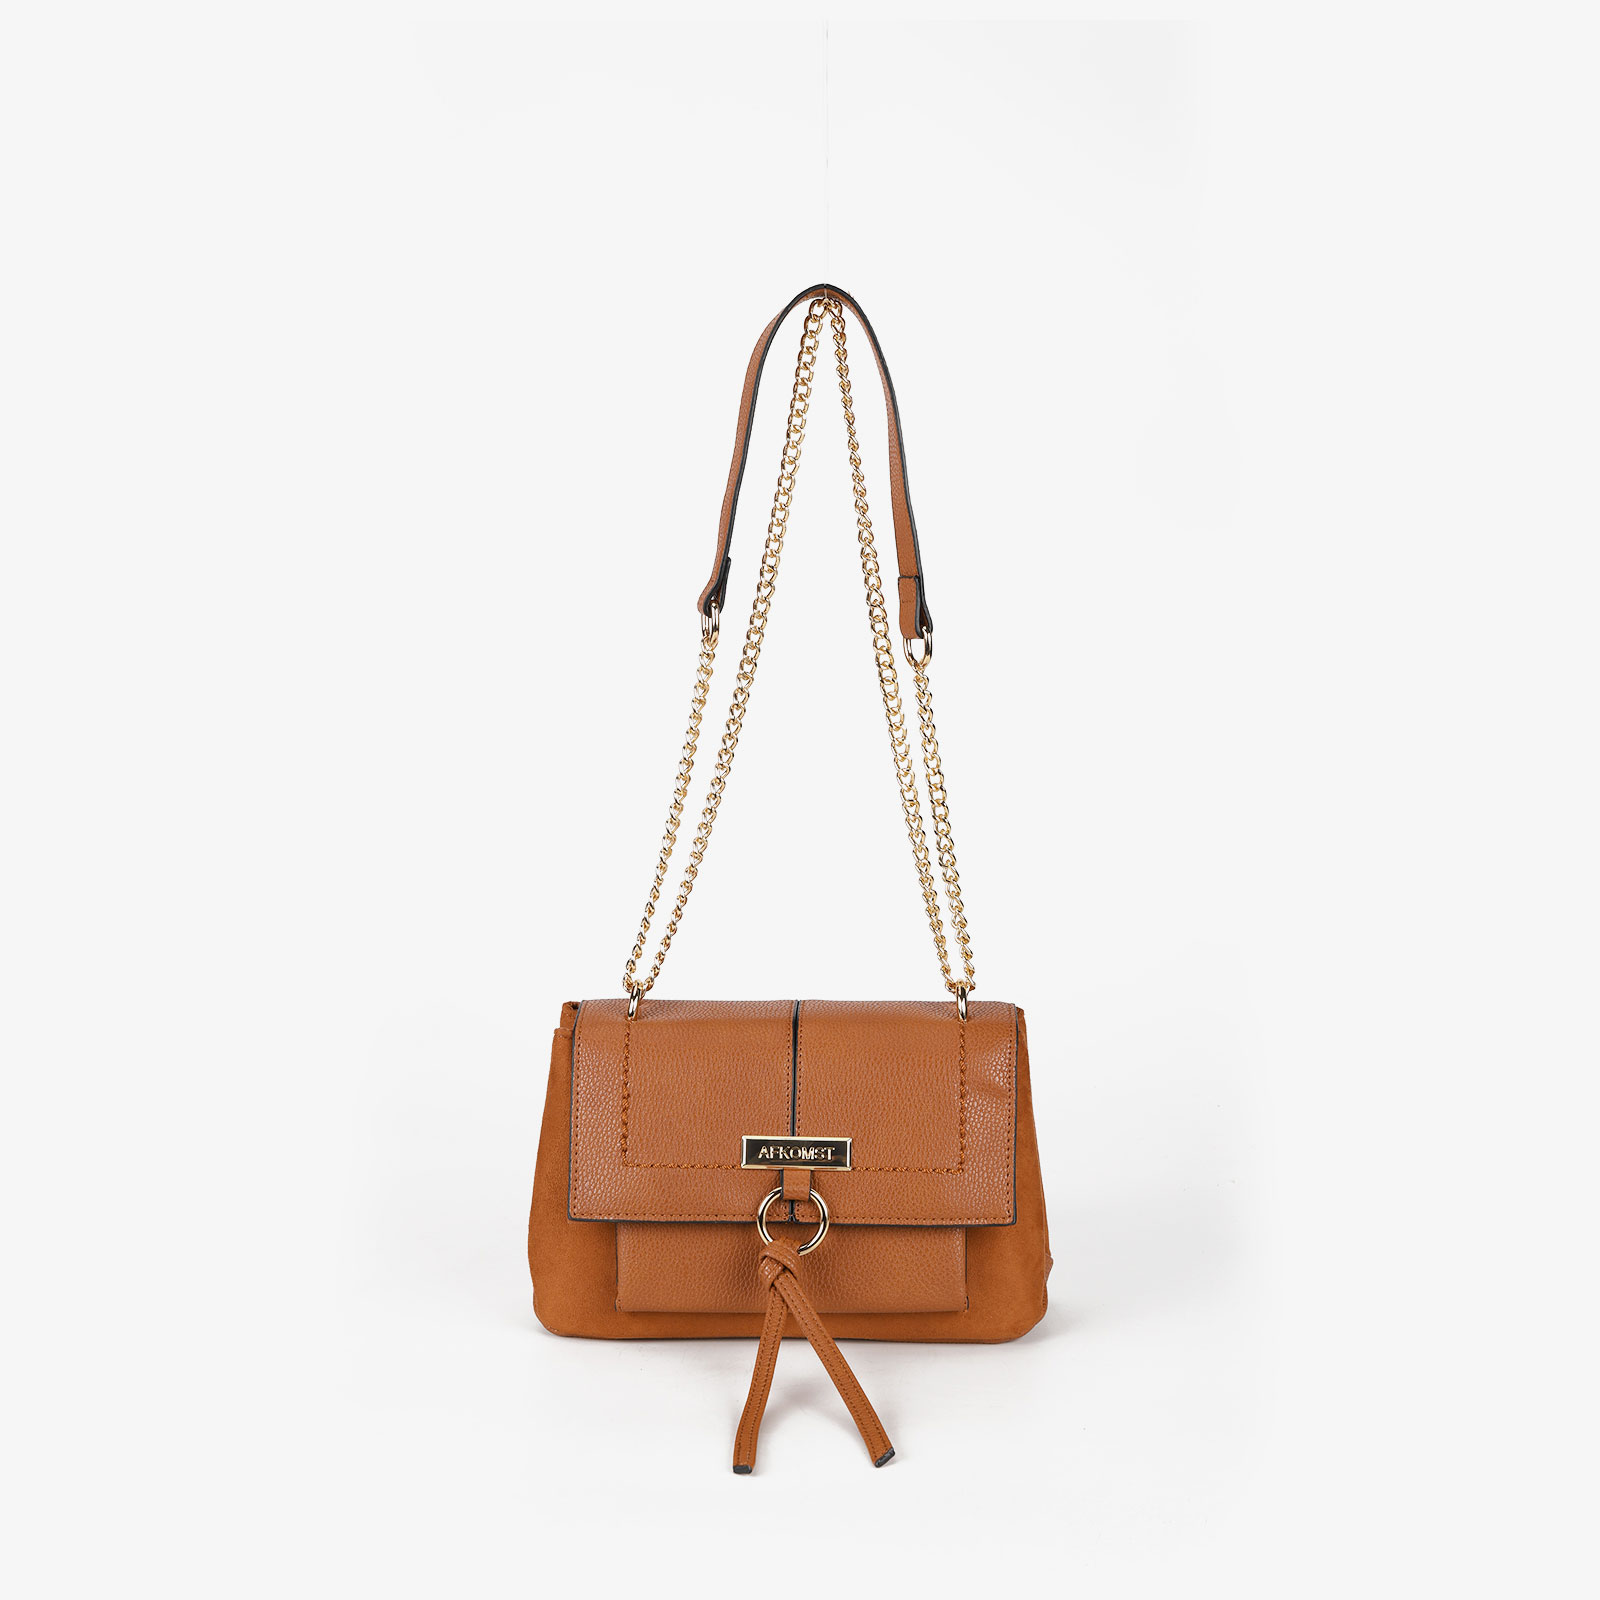 vkoo Small Crossbody bag with Chain Strap handbag for women